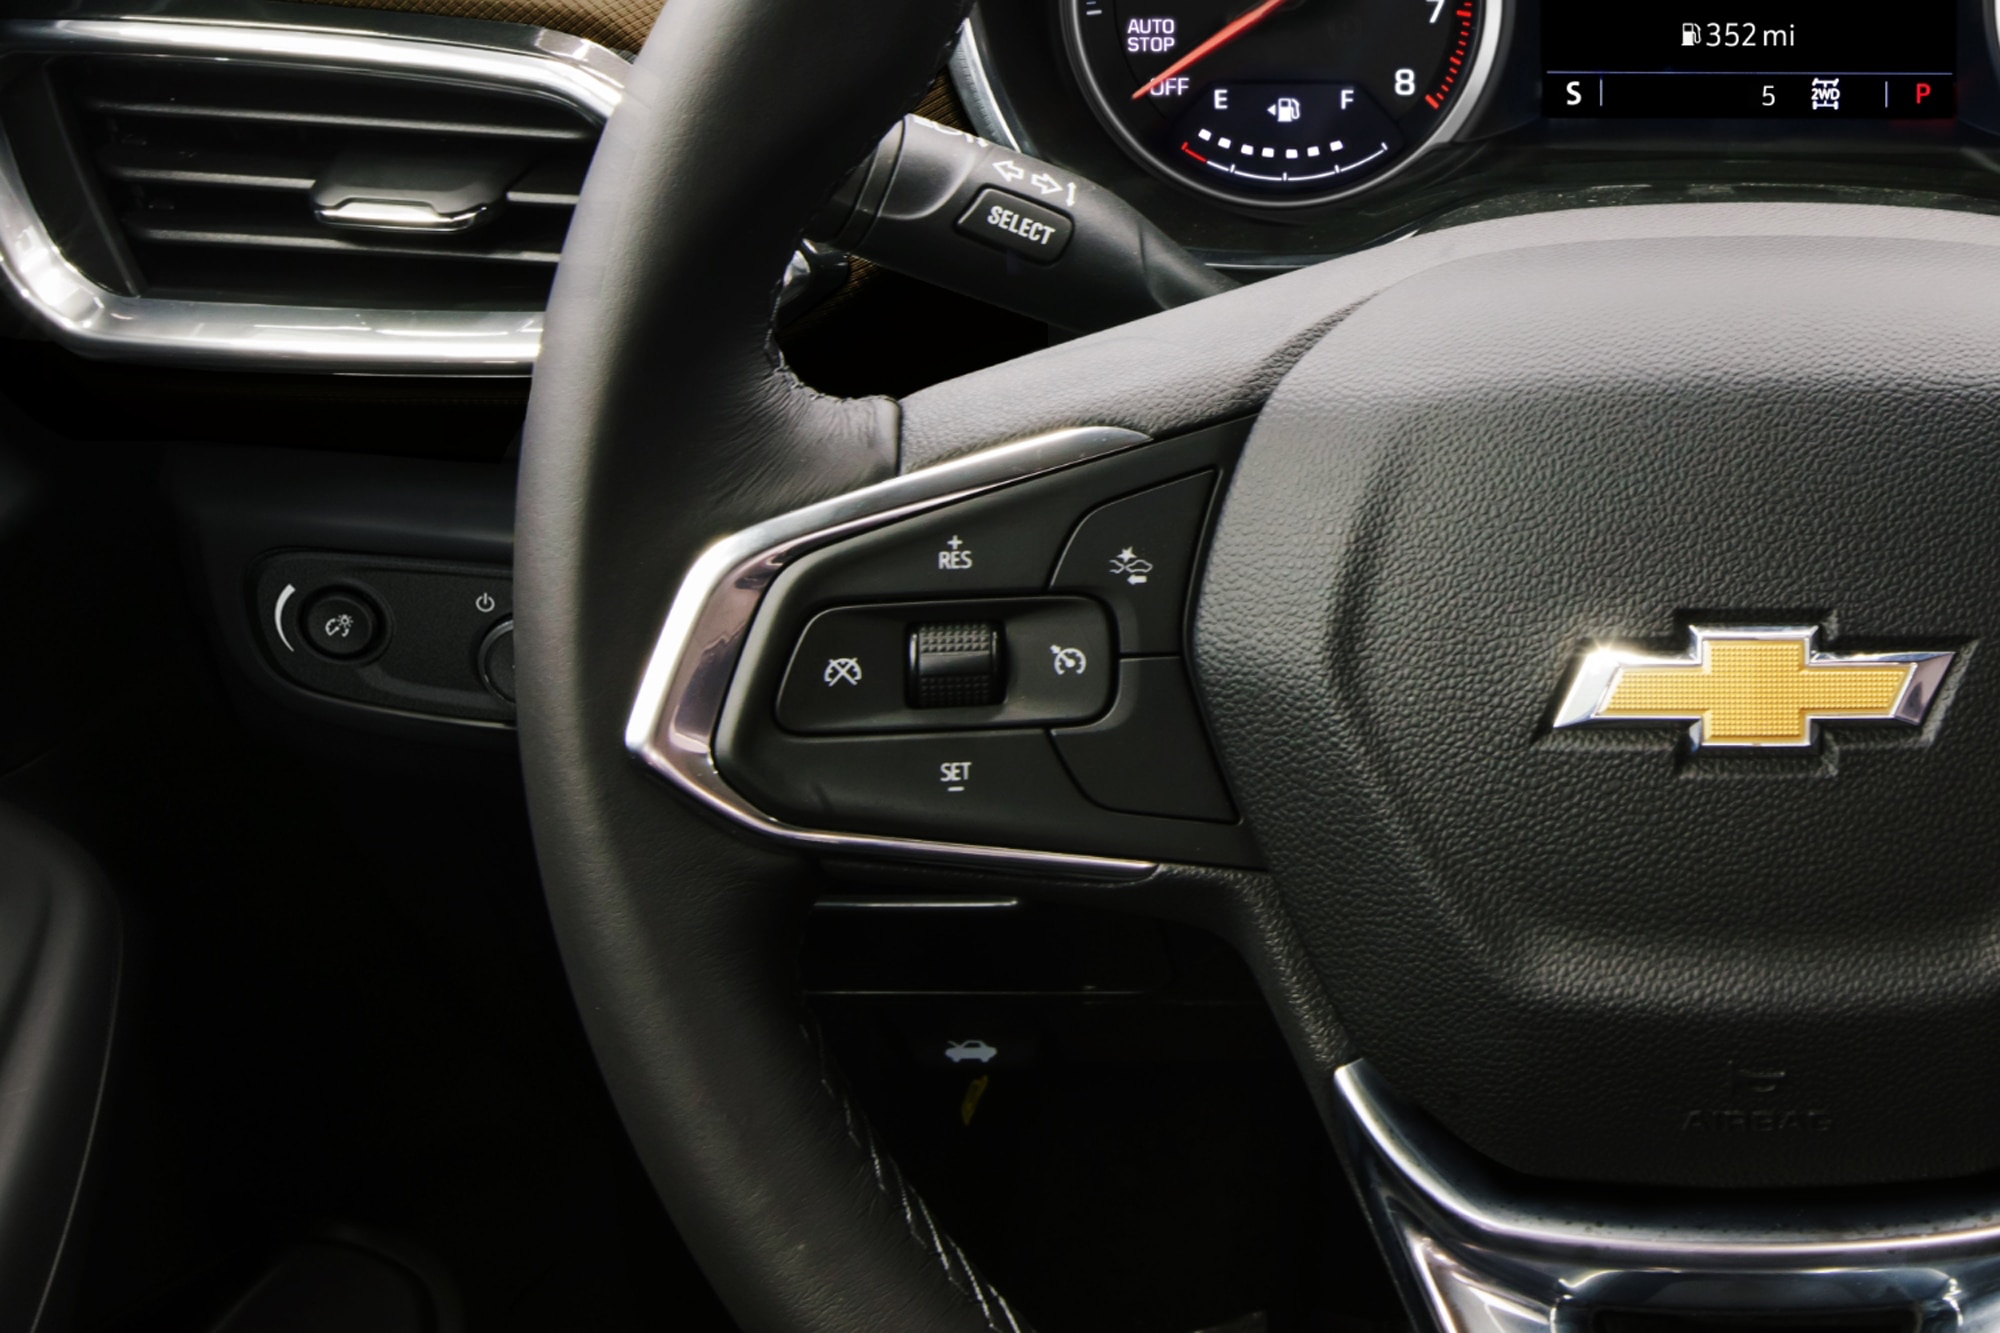 2023 Chevrolet Trailblazer safety feature buttons on steering wheel